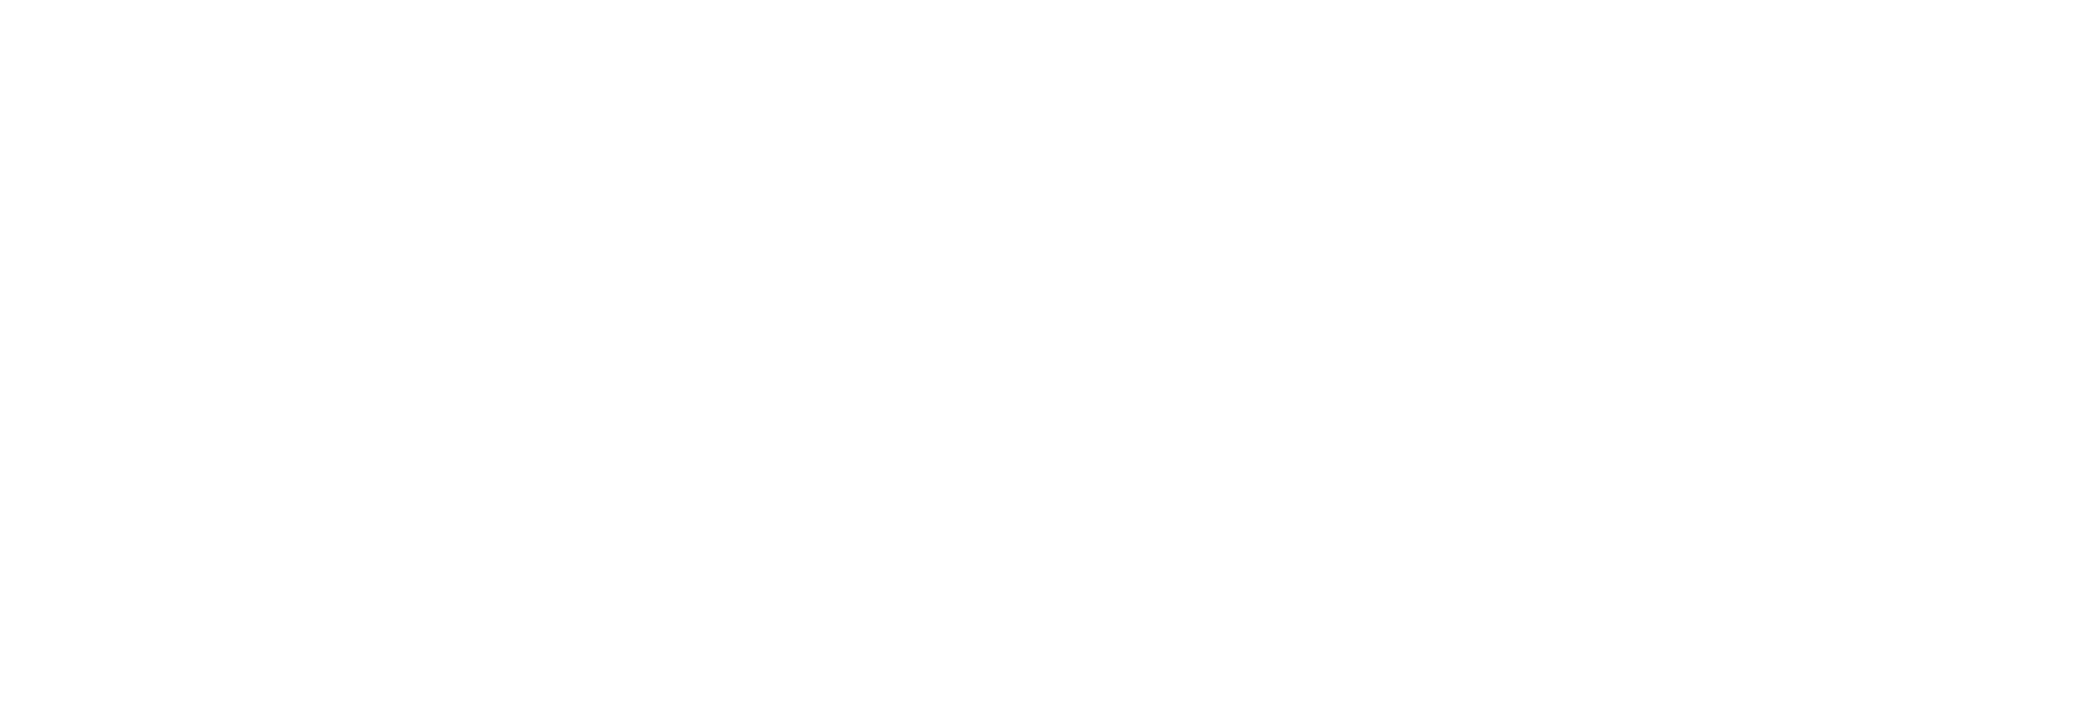 Malvern Panalytical